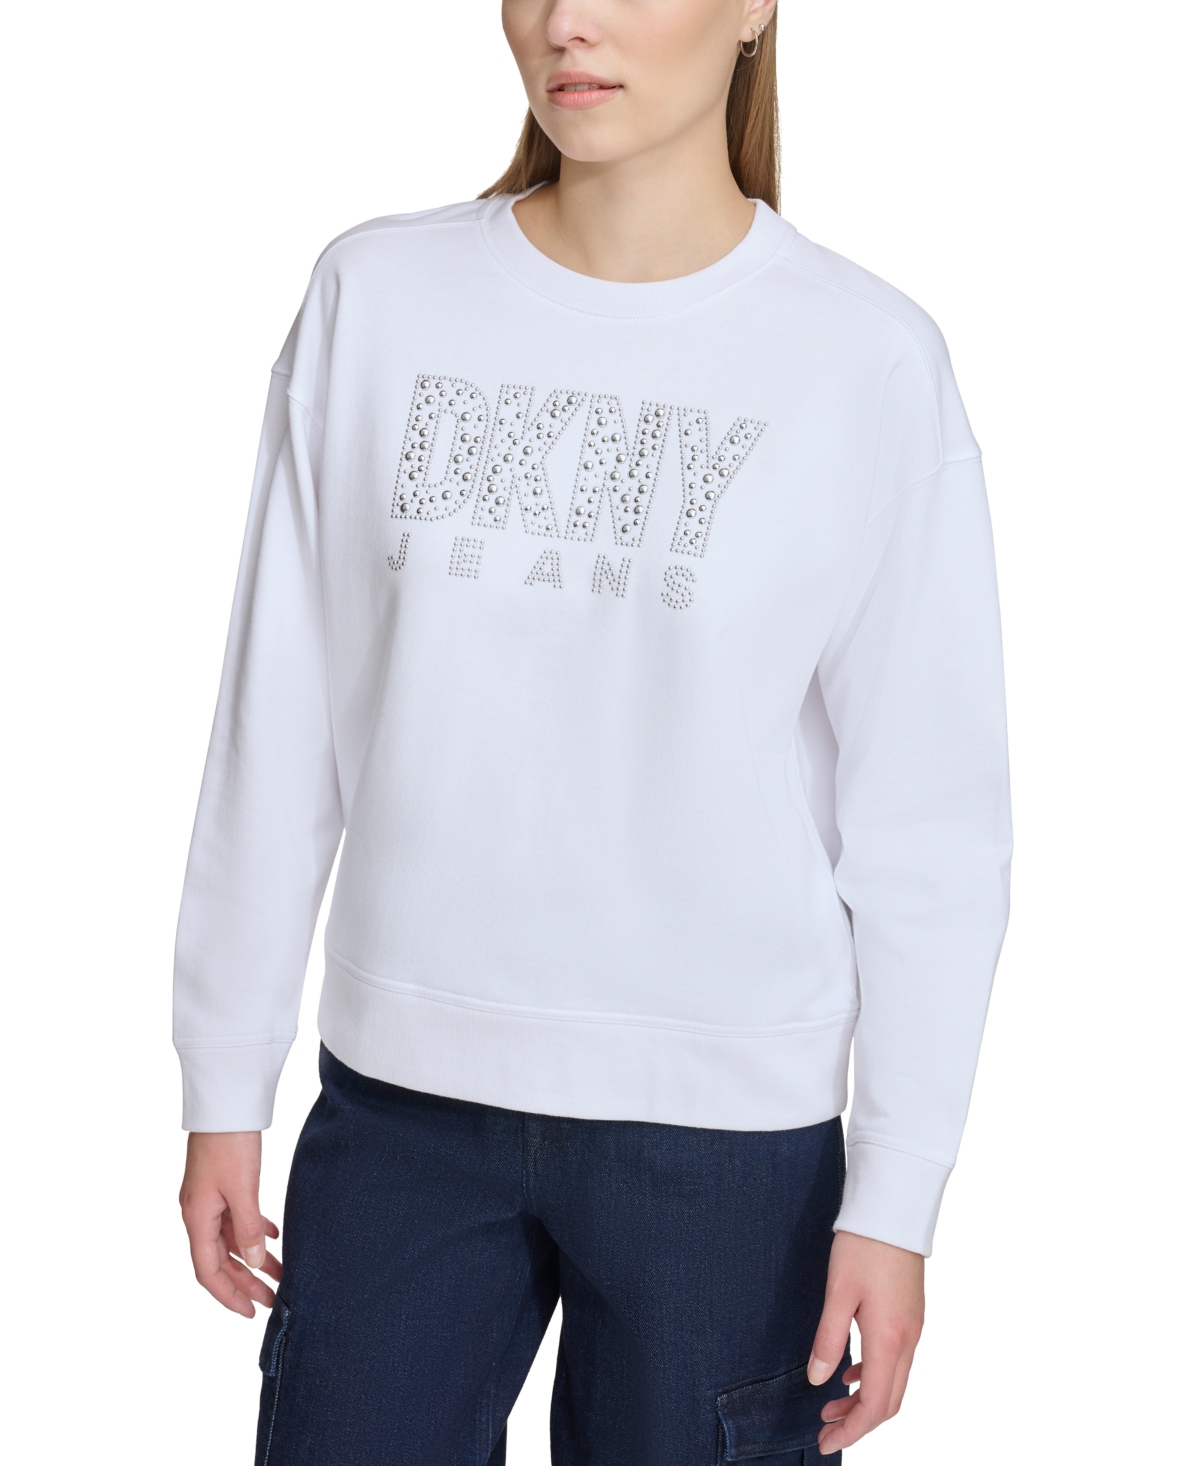 Women's Cotton Studded Logo Sweatshirt - G - Wht/shiny Silver